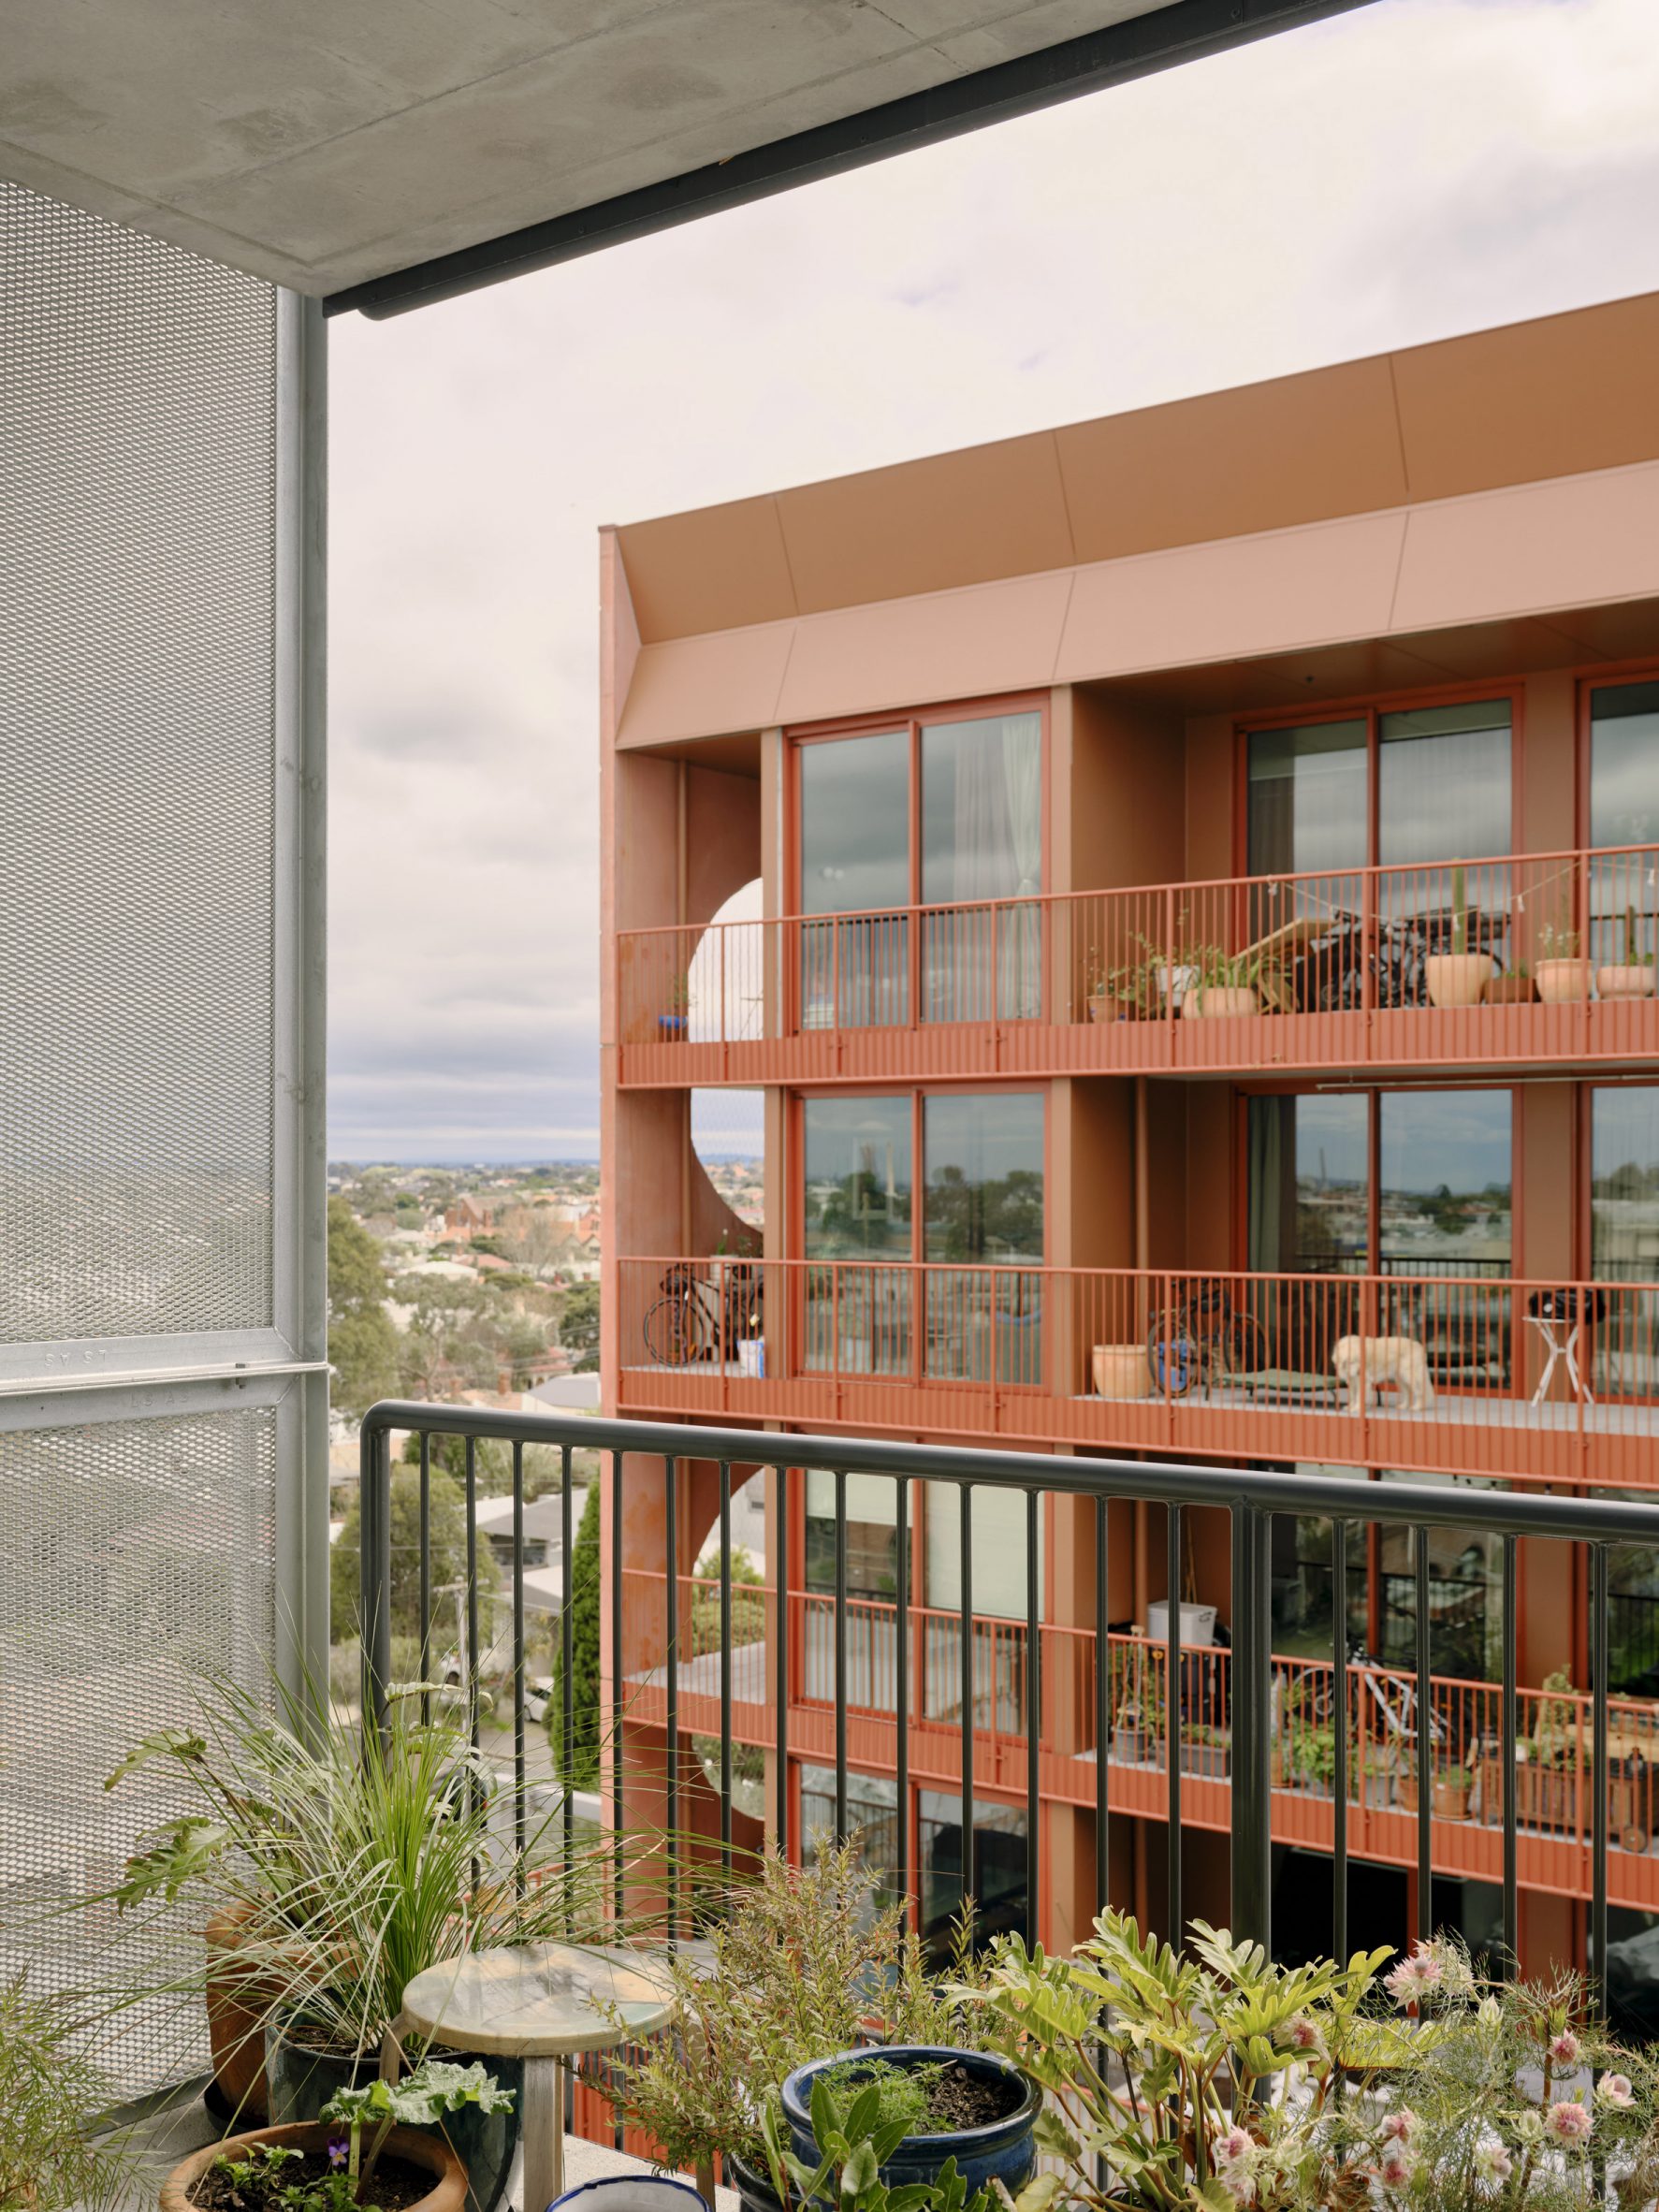 Photo of the Australian housing development